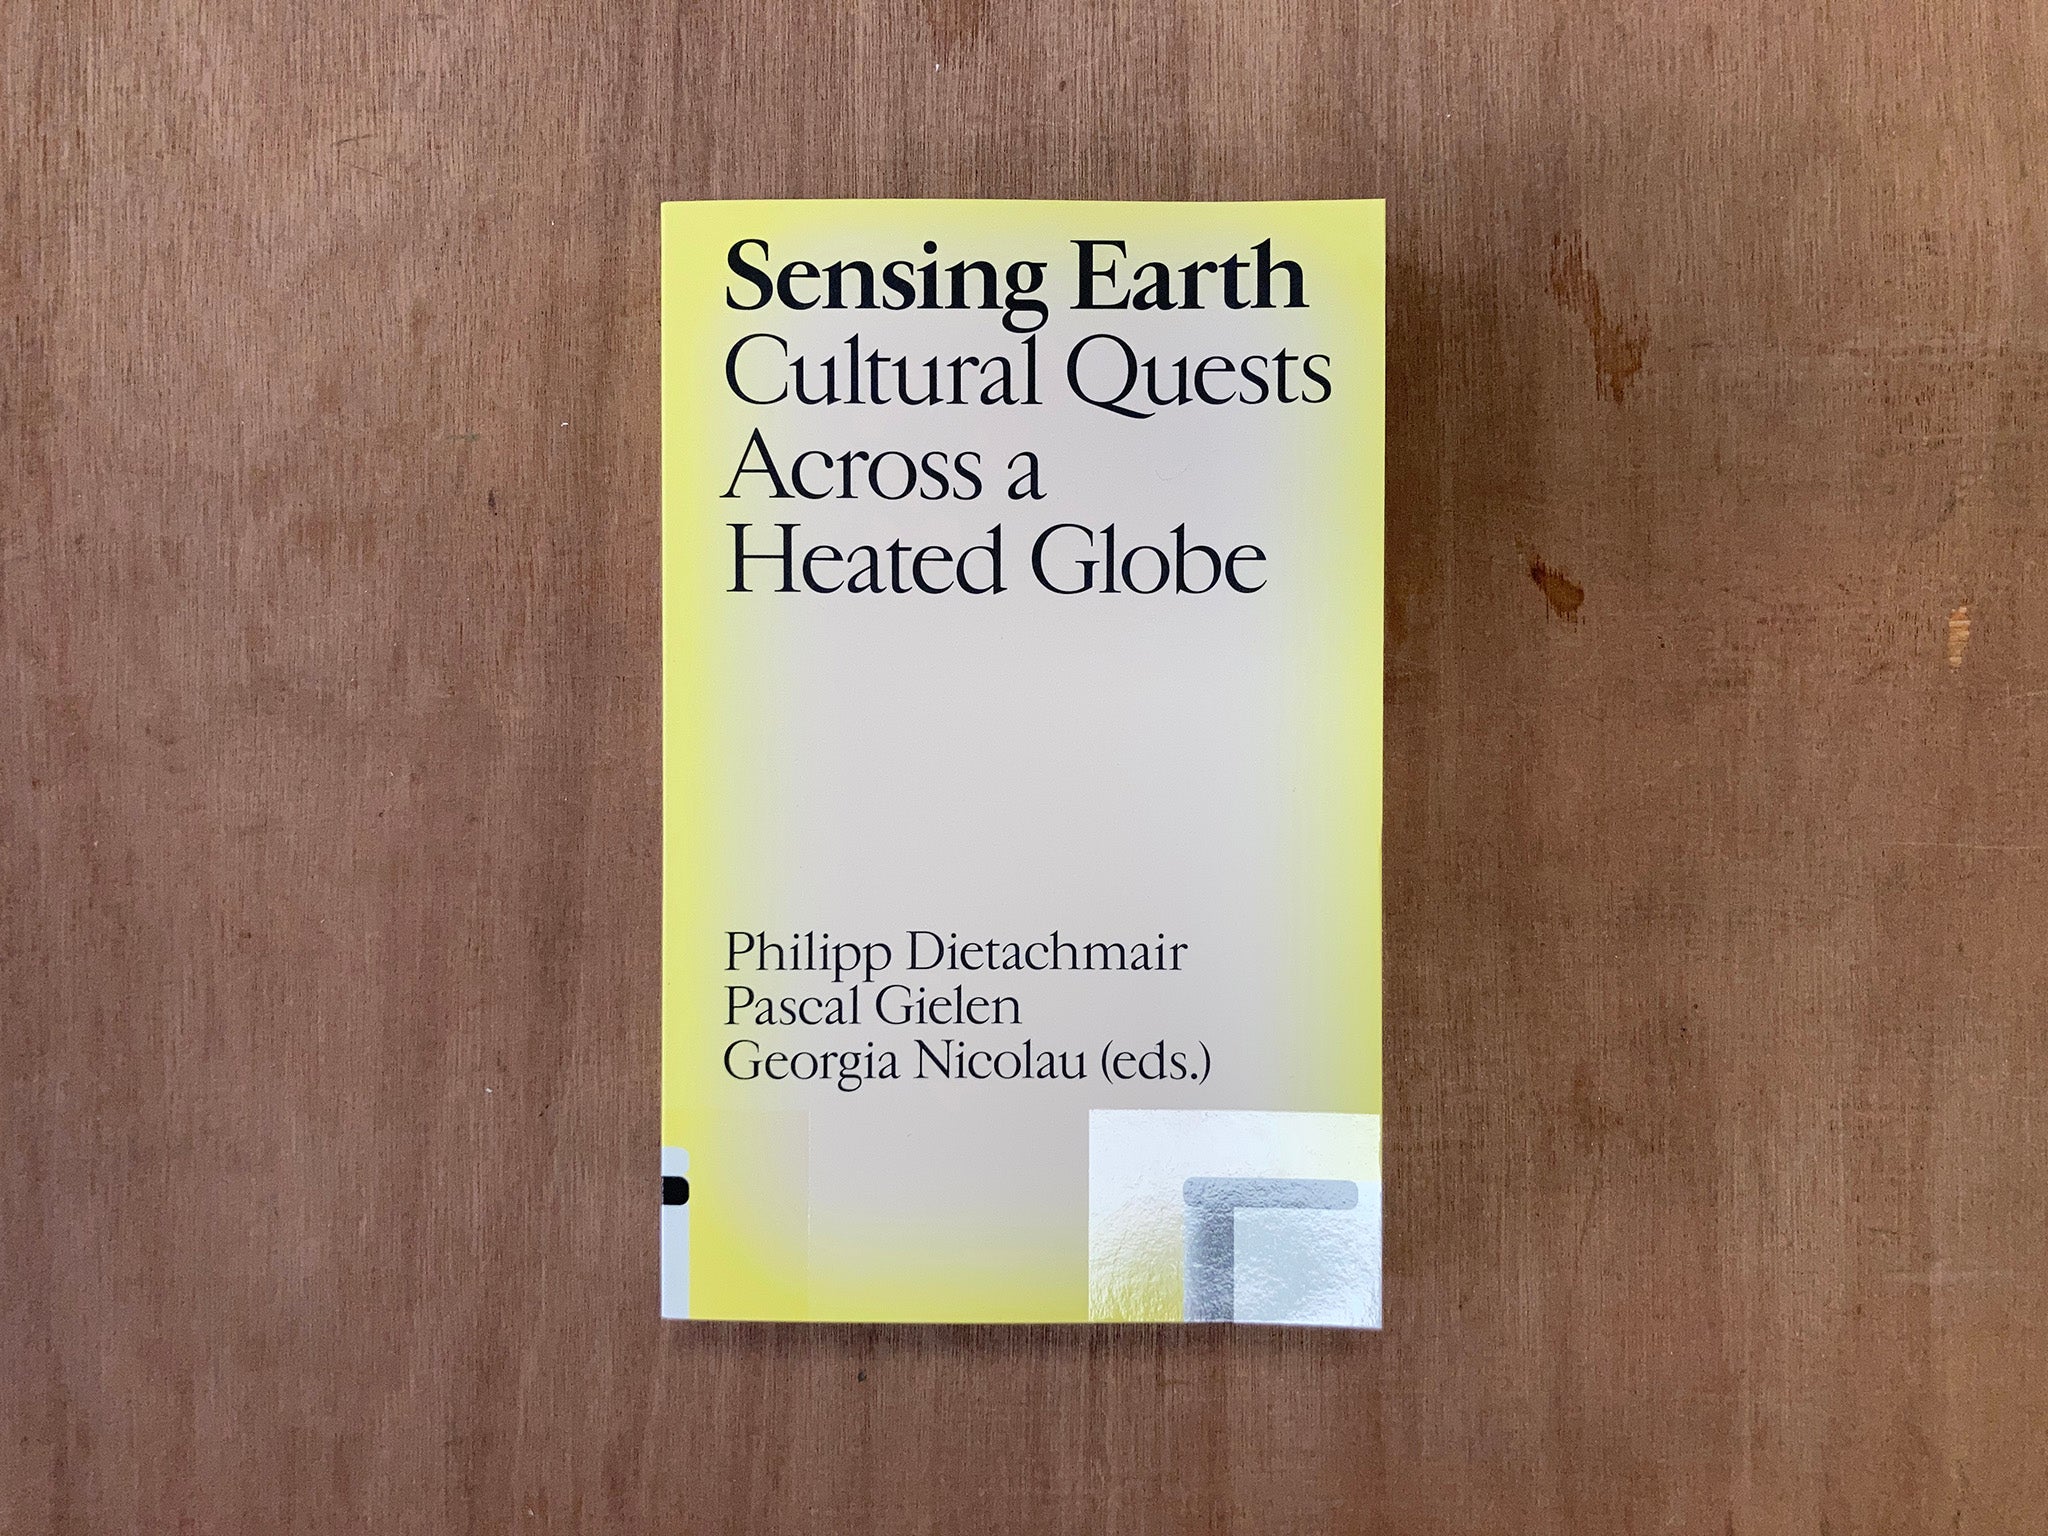 SENSING EARTH: CULTURAL QUESTS ACROSS A HEATED GLOBE